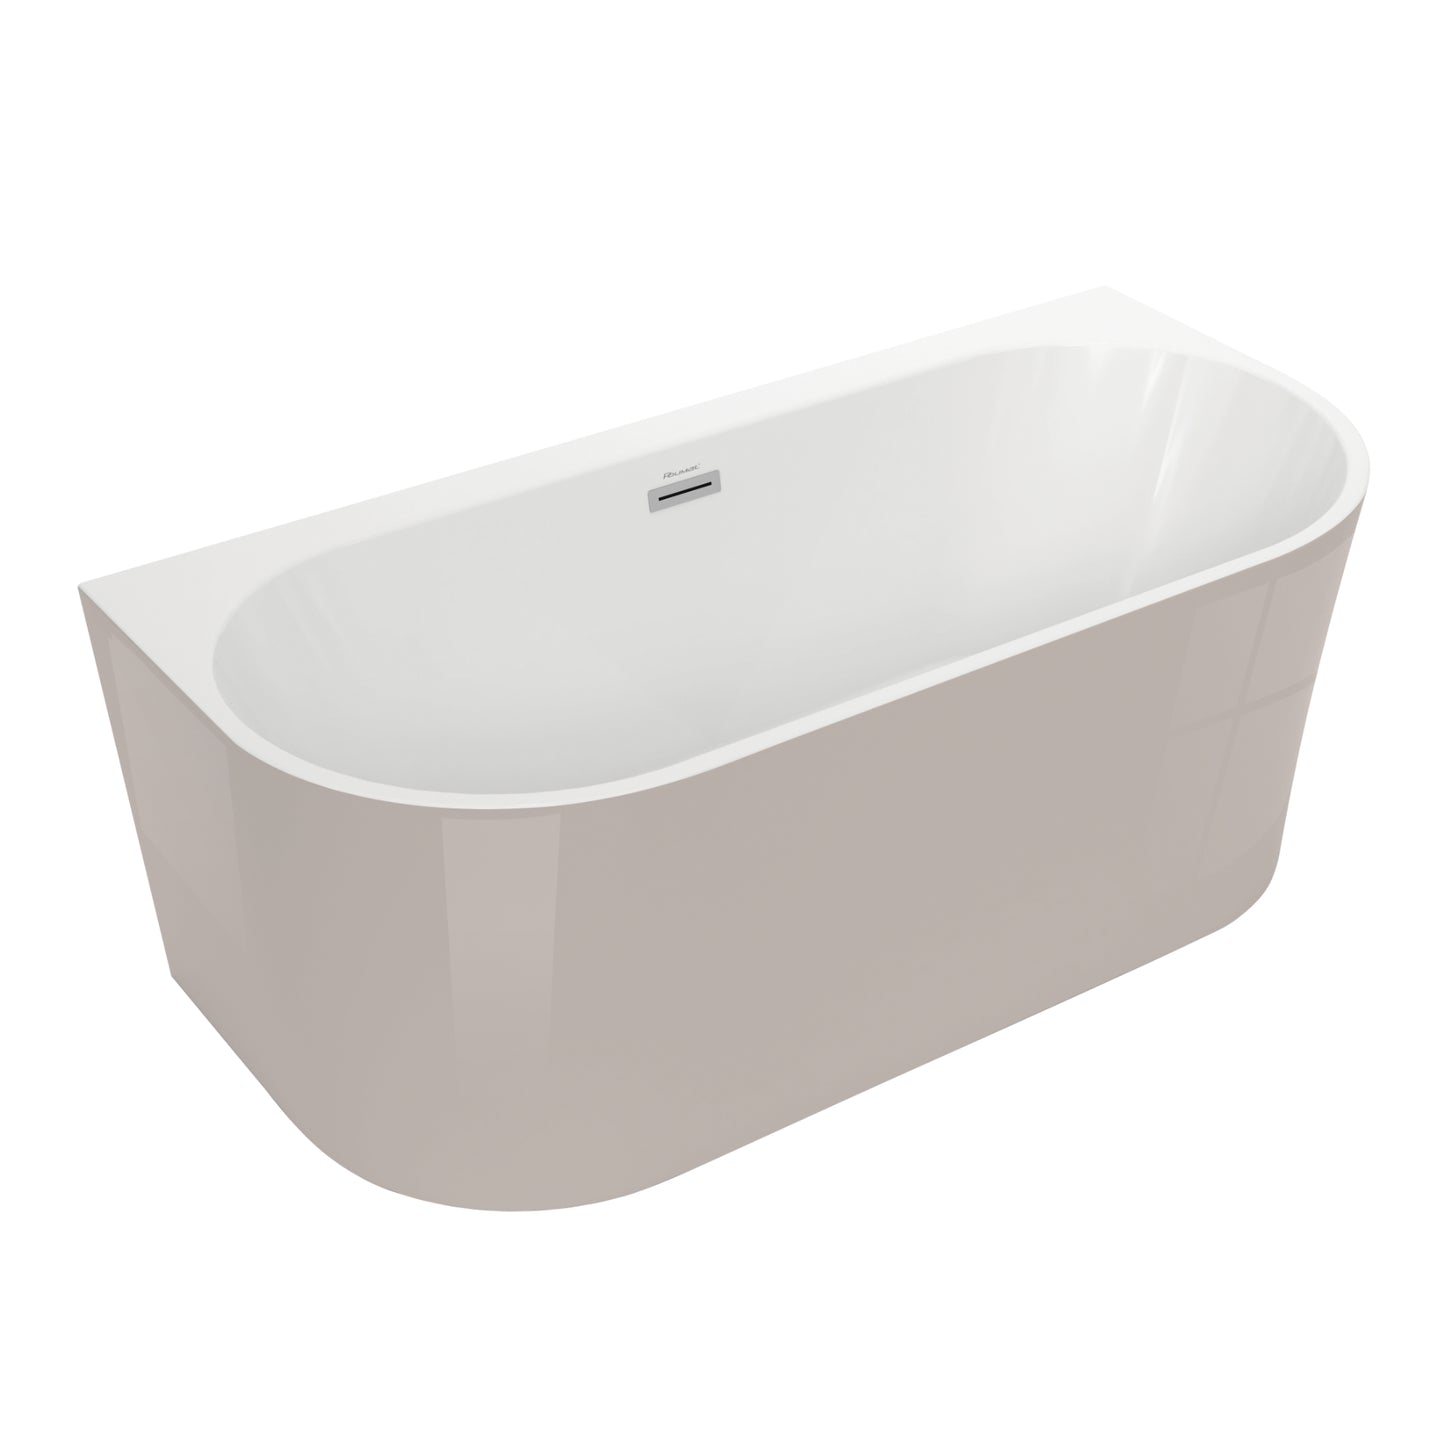 Load image into Gallery viewer, Acrylic freestanding bathtube SOLA 160 x 75 cm
